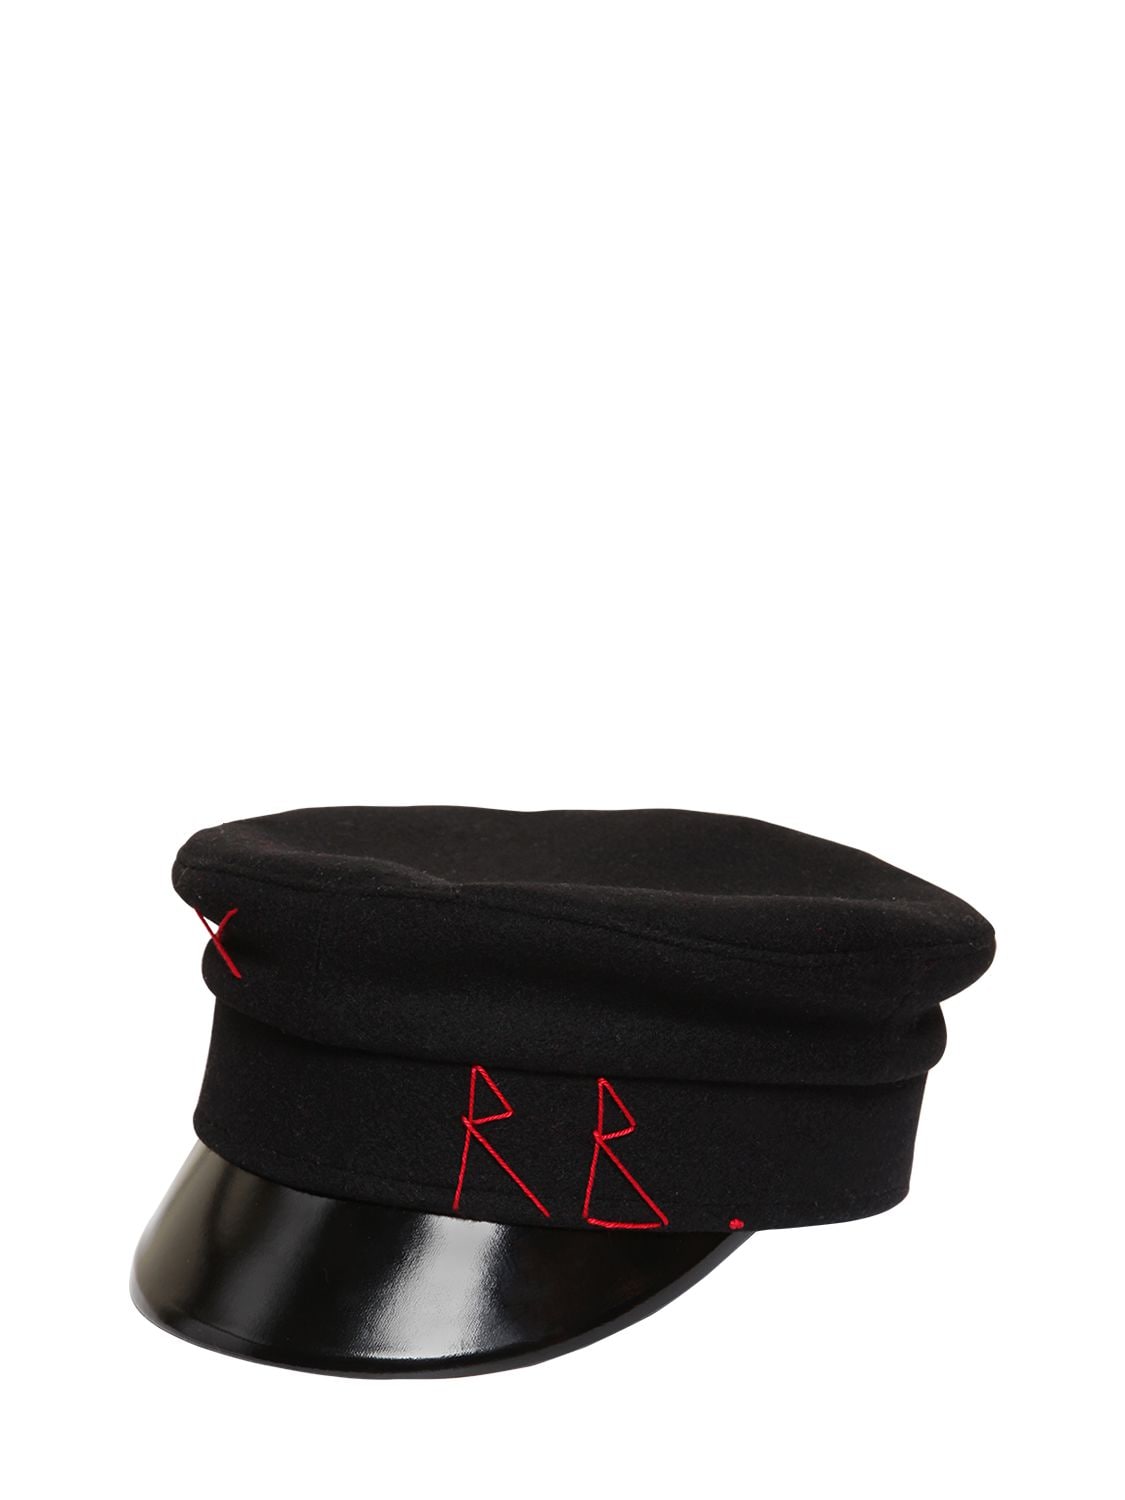 RUSLAN BAGINSKIY WOOL BAKER BOY CAP,69I99I003-QKXBQ0S1